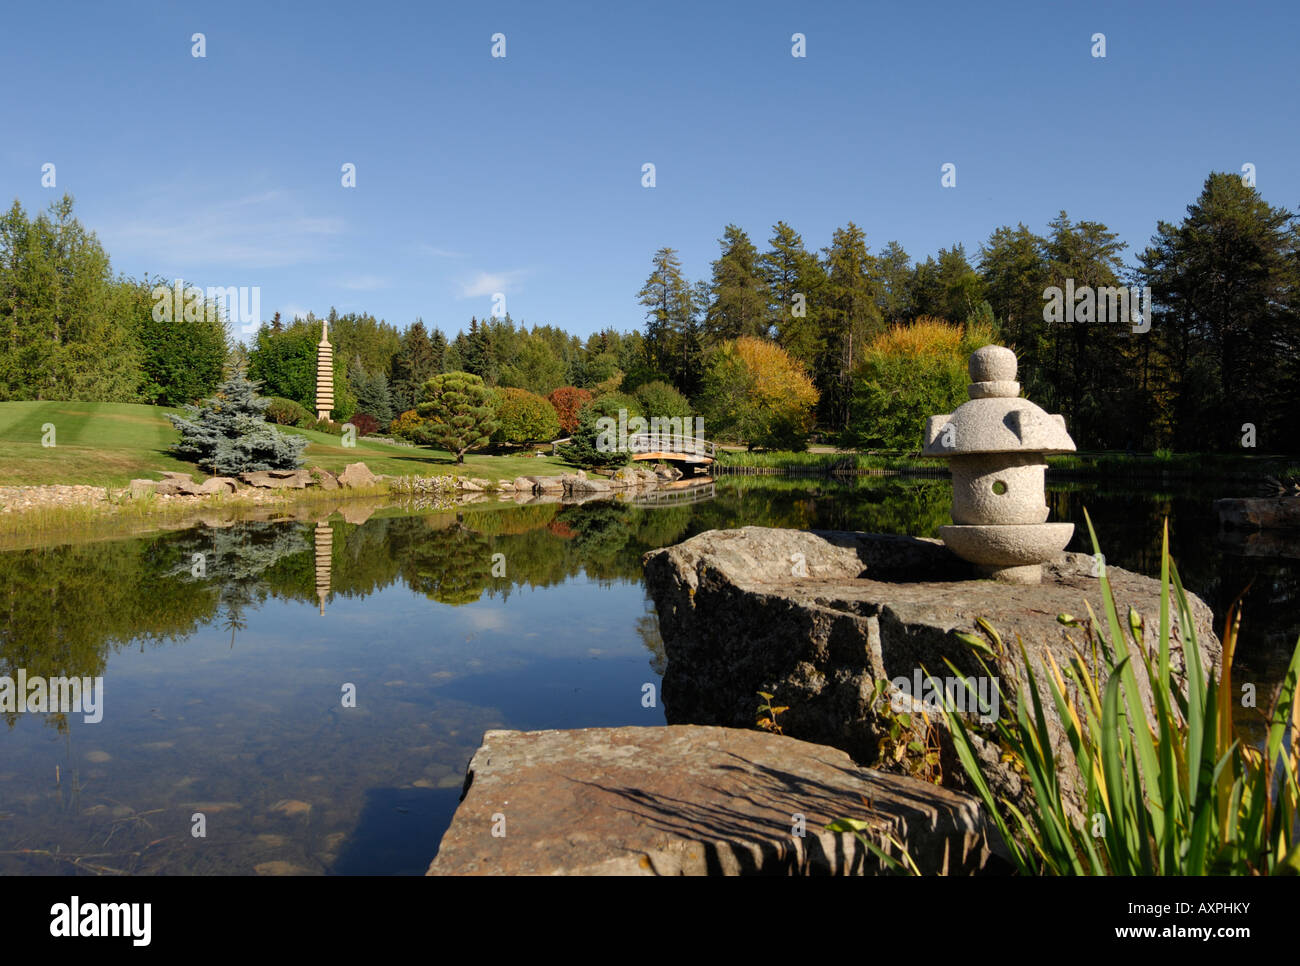 Giardino giapponese Devoniano Giardini Botanici di Alberta in Canada Foto Stock